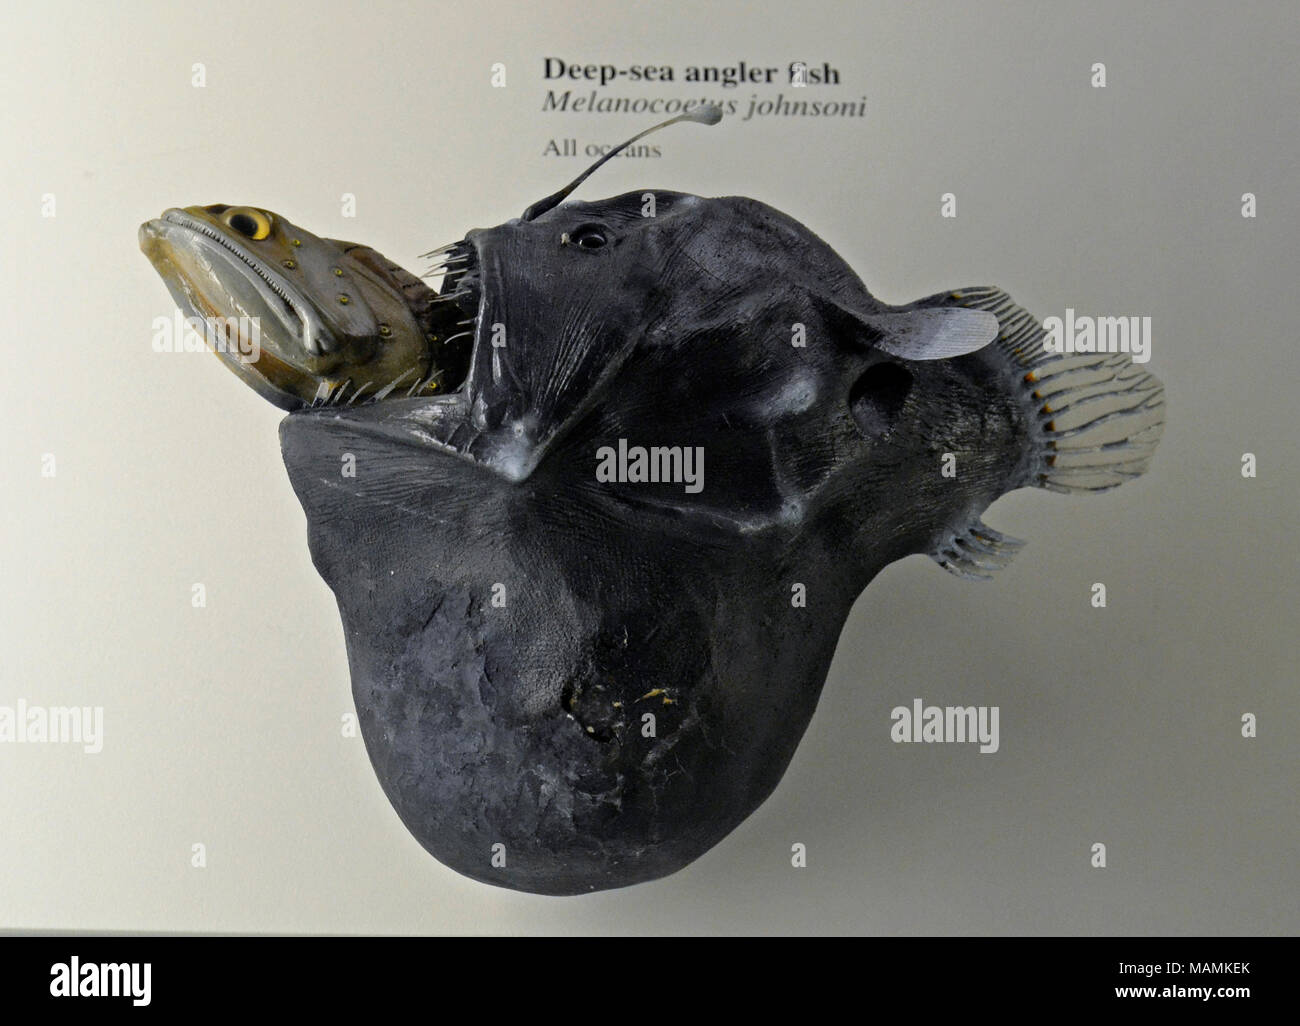 Deep sea Angler Fische einen anderen Fisch am Natural History Museum at Tring, UK schlucken. Stockfoto